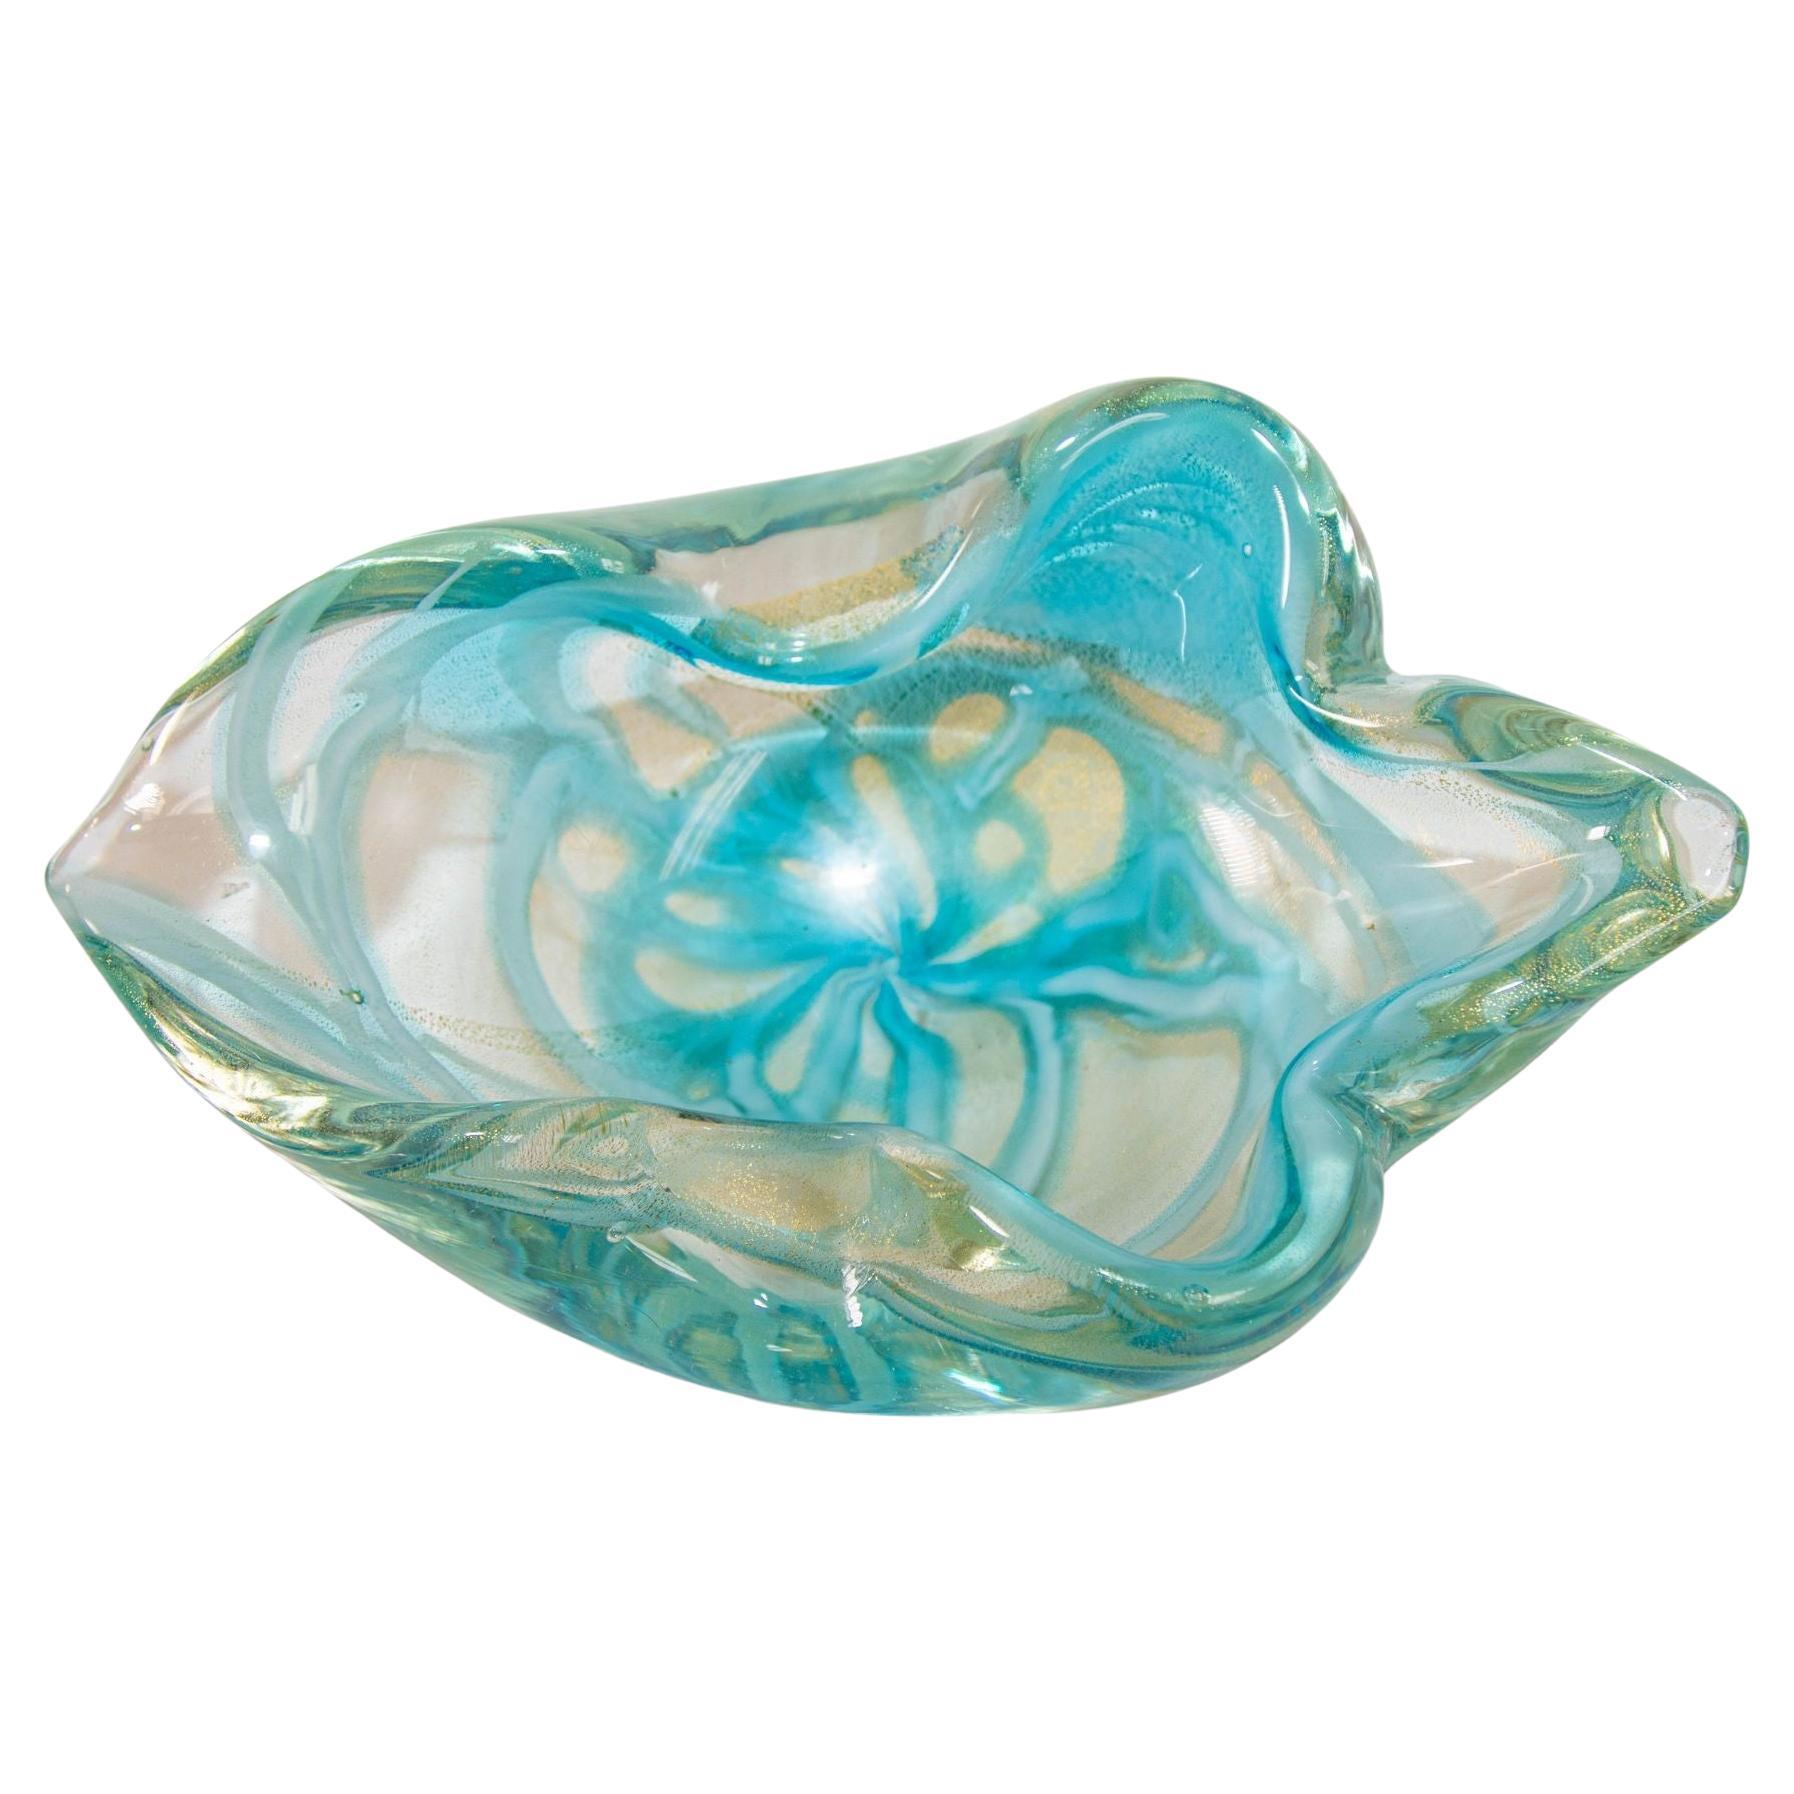 Smoked Murano Glass Centerpiece with Pearled Spirals - Artisanal